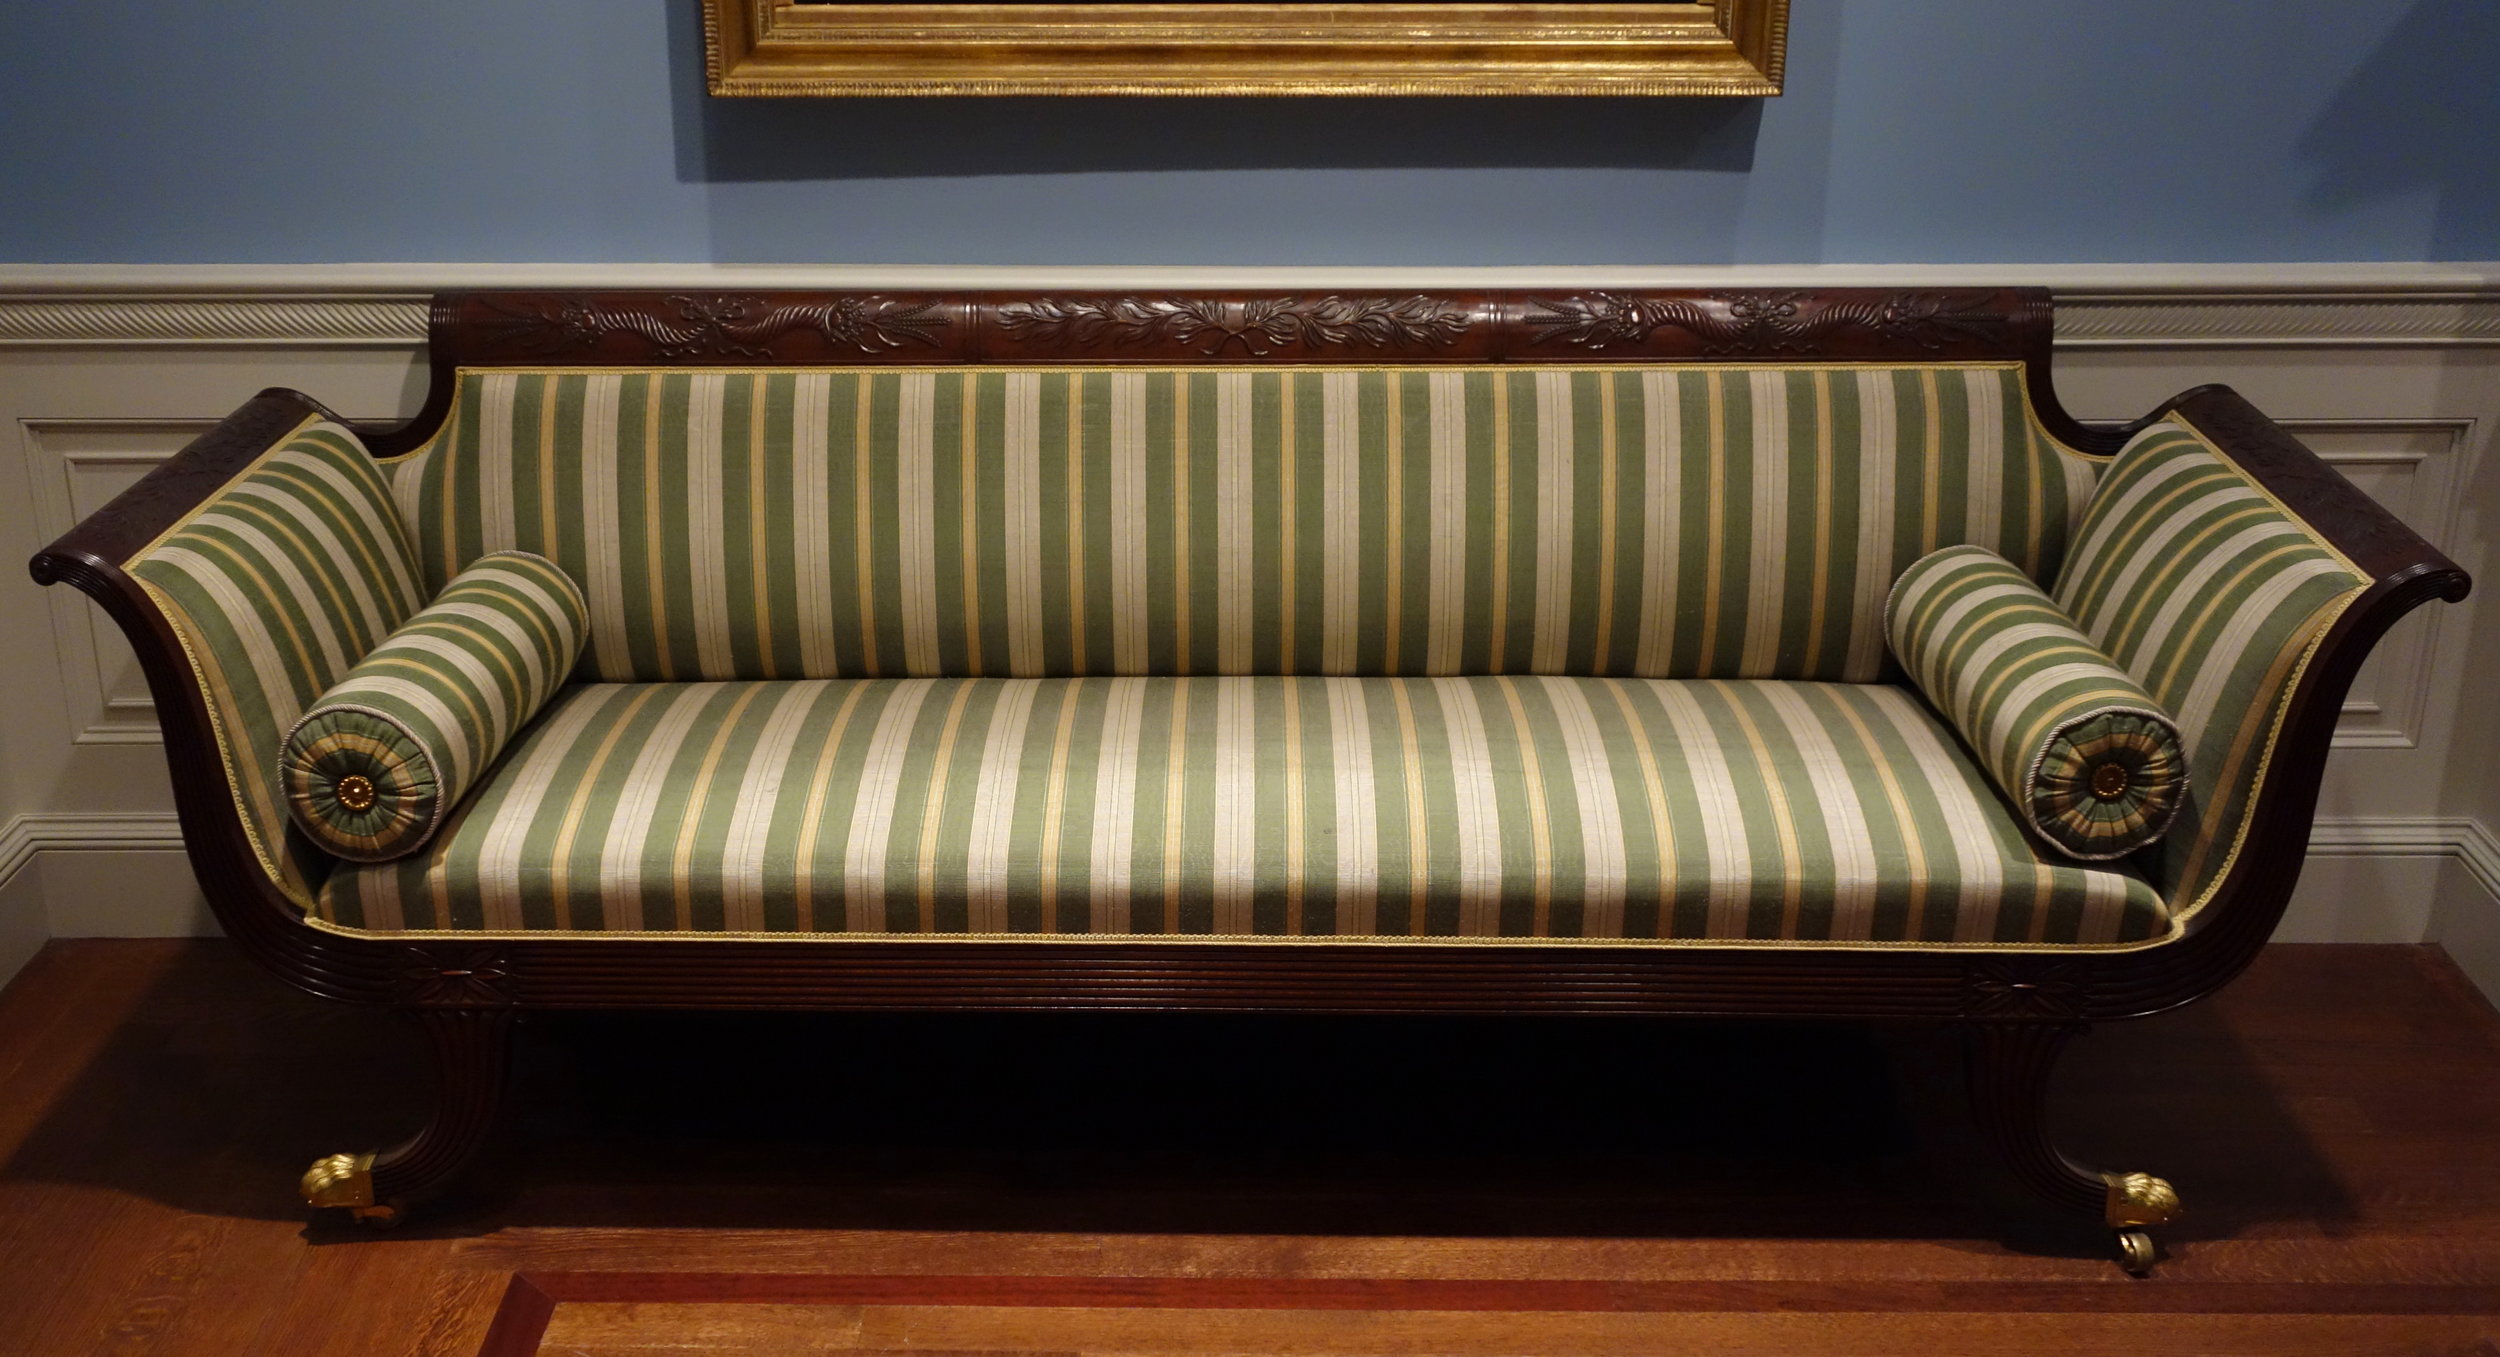 Sofa,_attributed_to_Duncan_Phyfe_shop,_New_York,_1810-1815,_mahogany,_cherry,_pine,_gilt_brass,_modern_upholstery_-_Cincinnati_Art_Museum_-_DSC04583.jpg